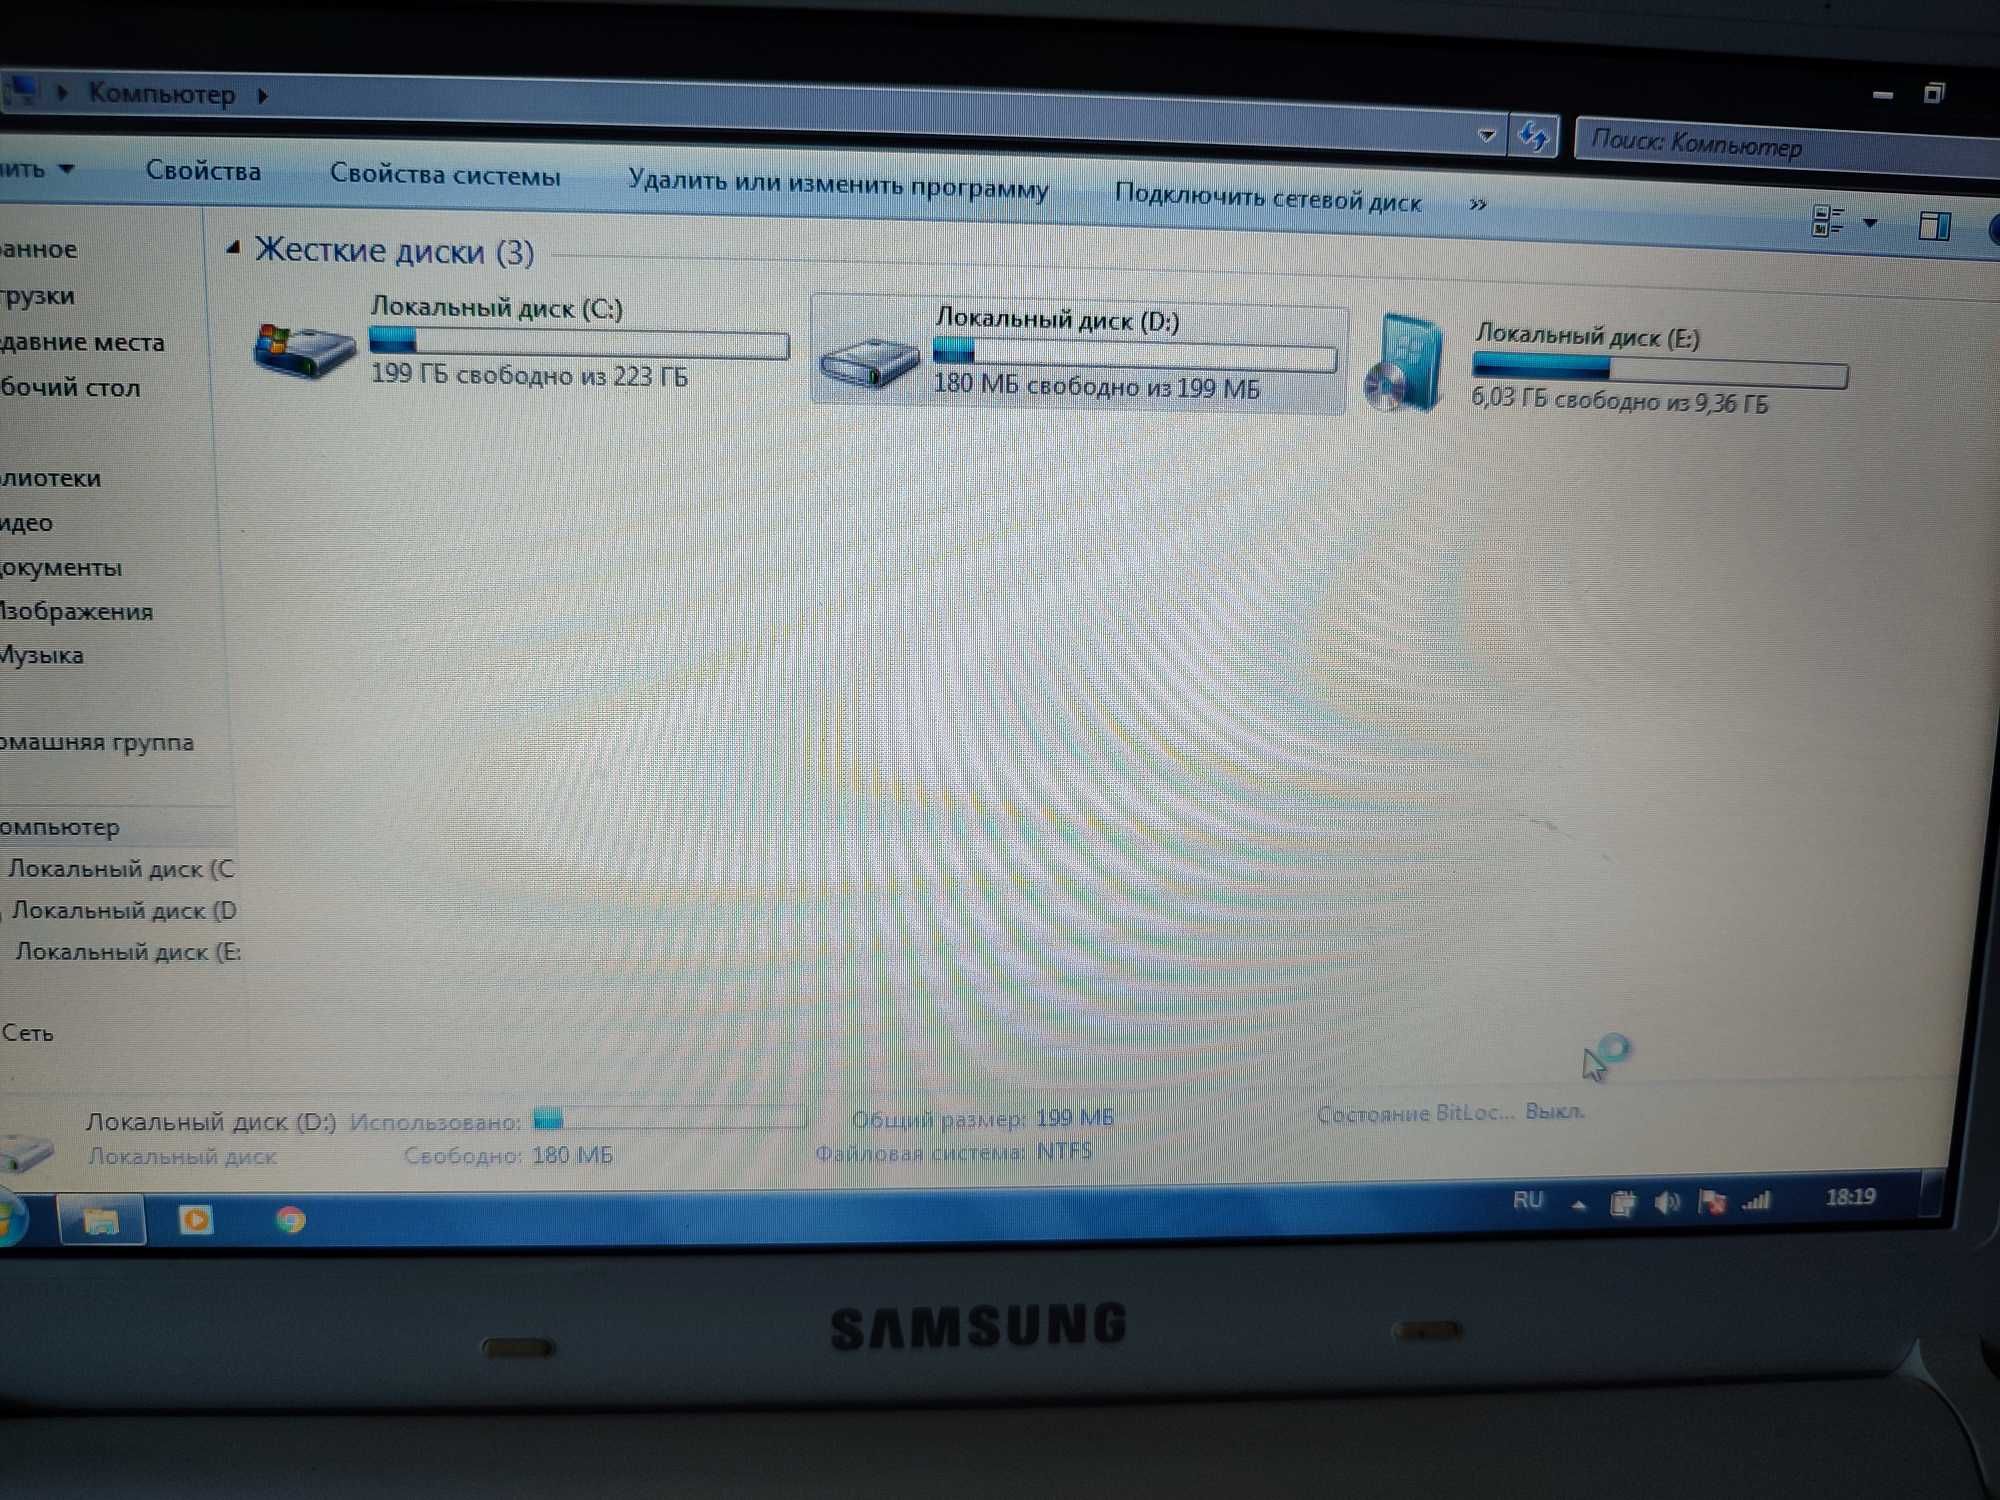 Нетбук (маленький ноутбук) Samsung N143 Plus HDD 230Гб, 10'', 1 Гб ОЗУ